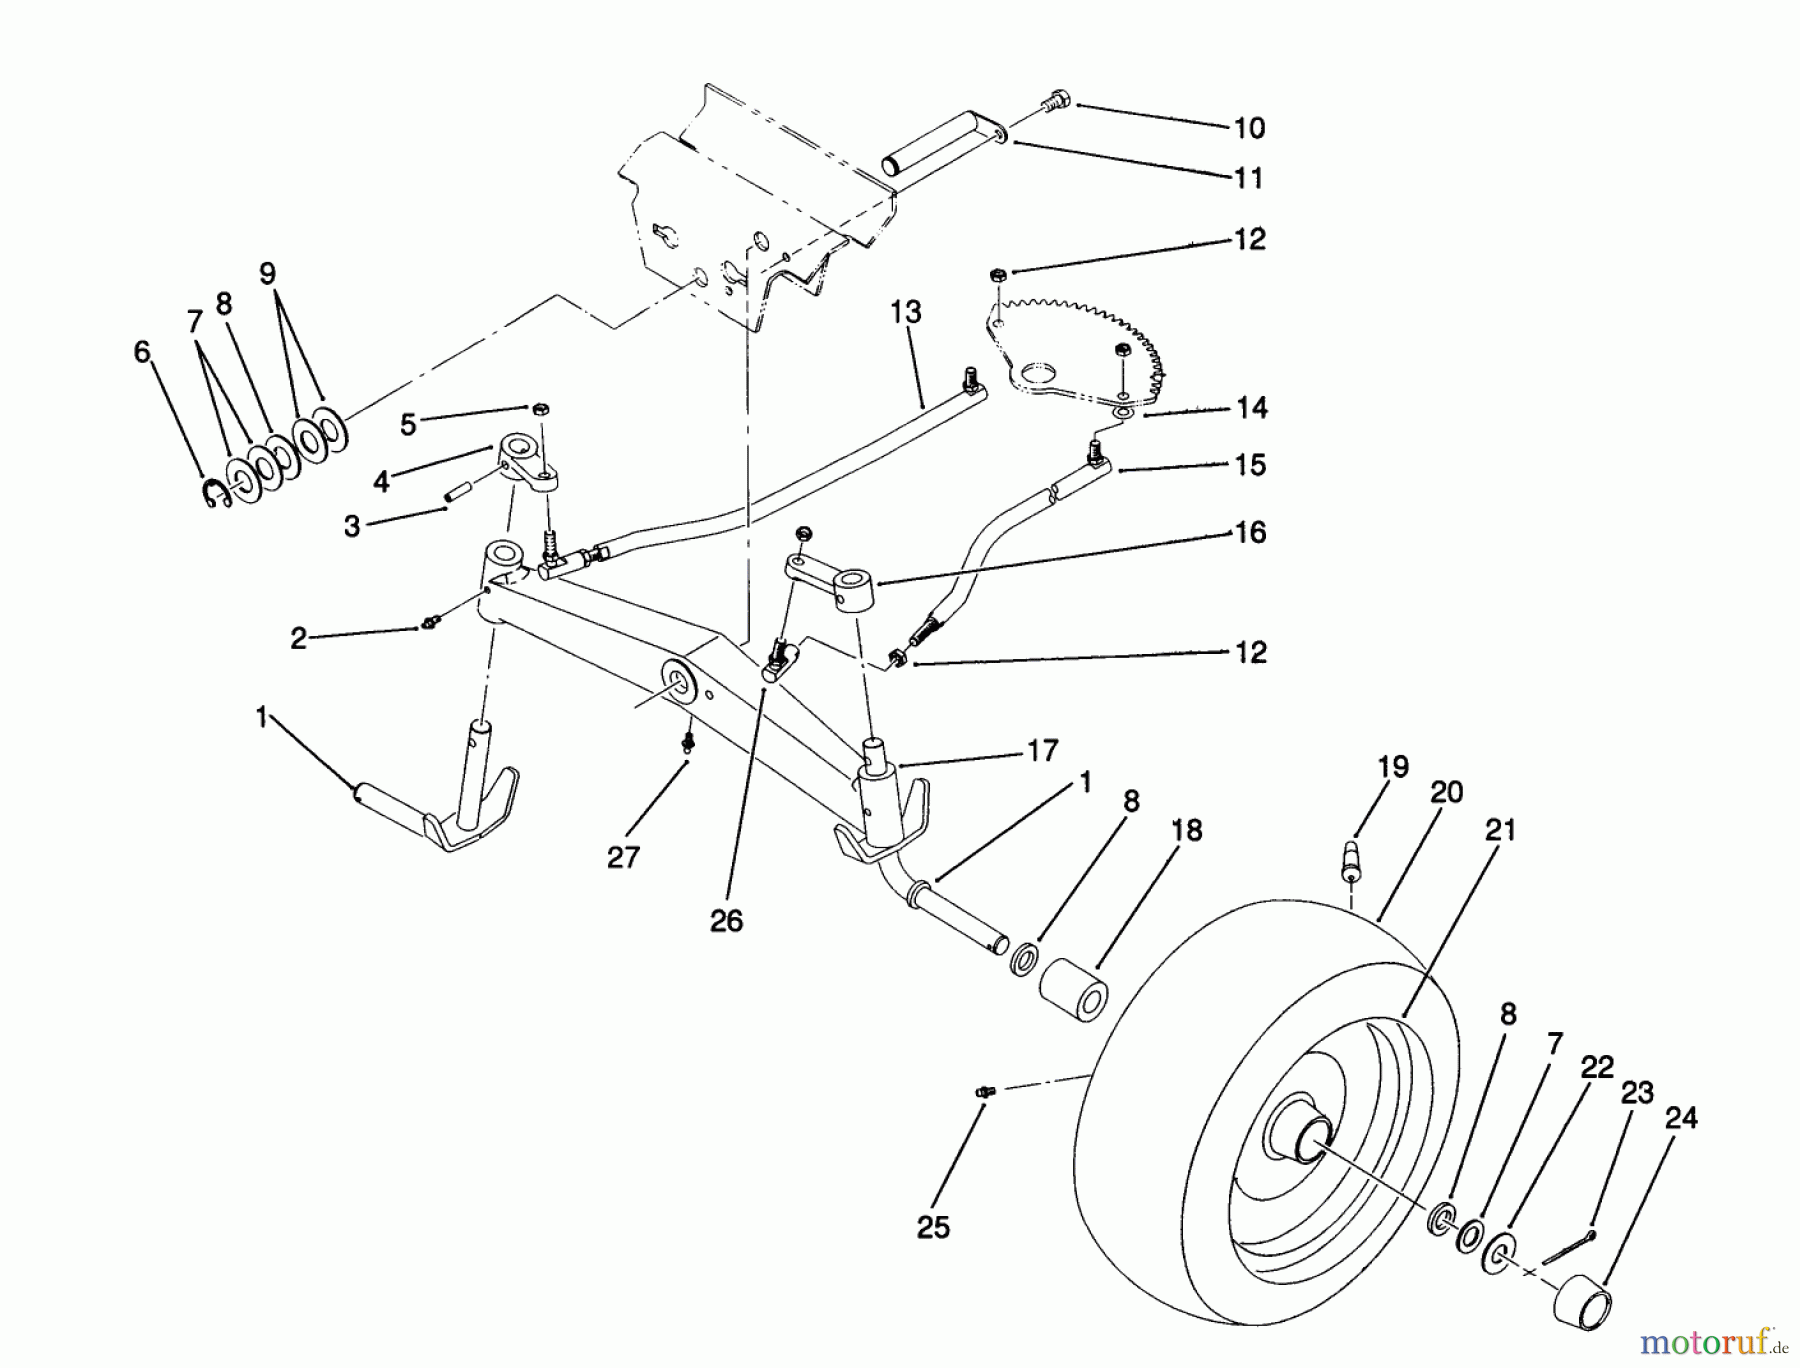  Toro Neu Mowers, Lawn & Garden Tractor Seite 1 22-14O501 (244-5) - Toro 244-5 Yard Tractor, 1991 (1000001-1999999) FRONT AXLE ASSEMBLY